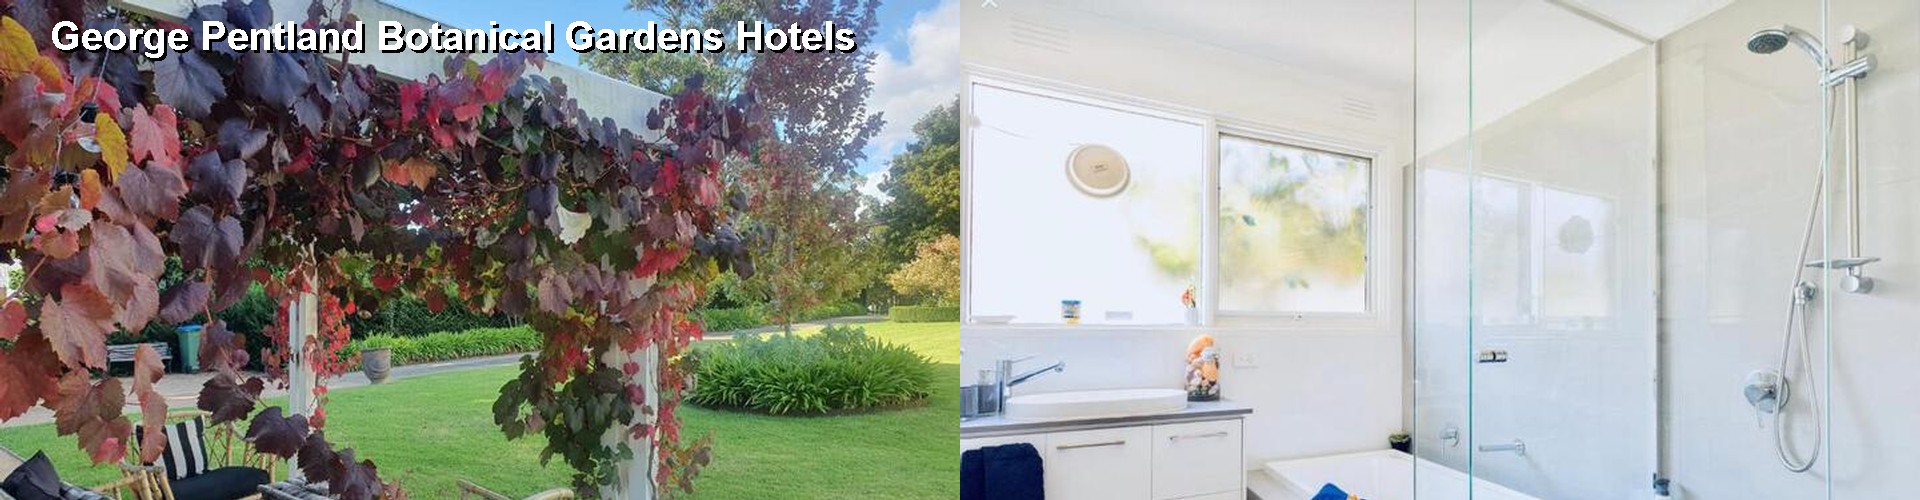 5 Best Hotels near George Pentland Botanical Gardens